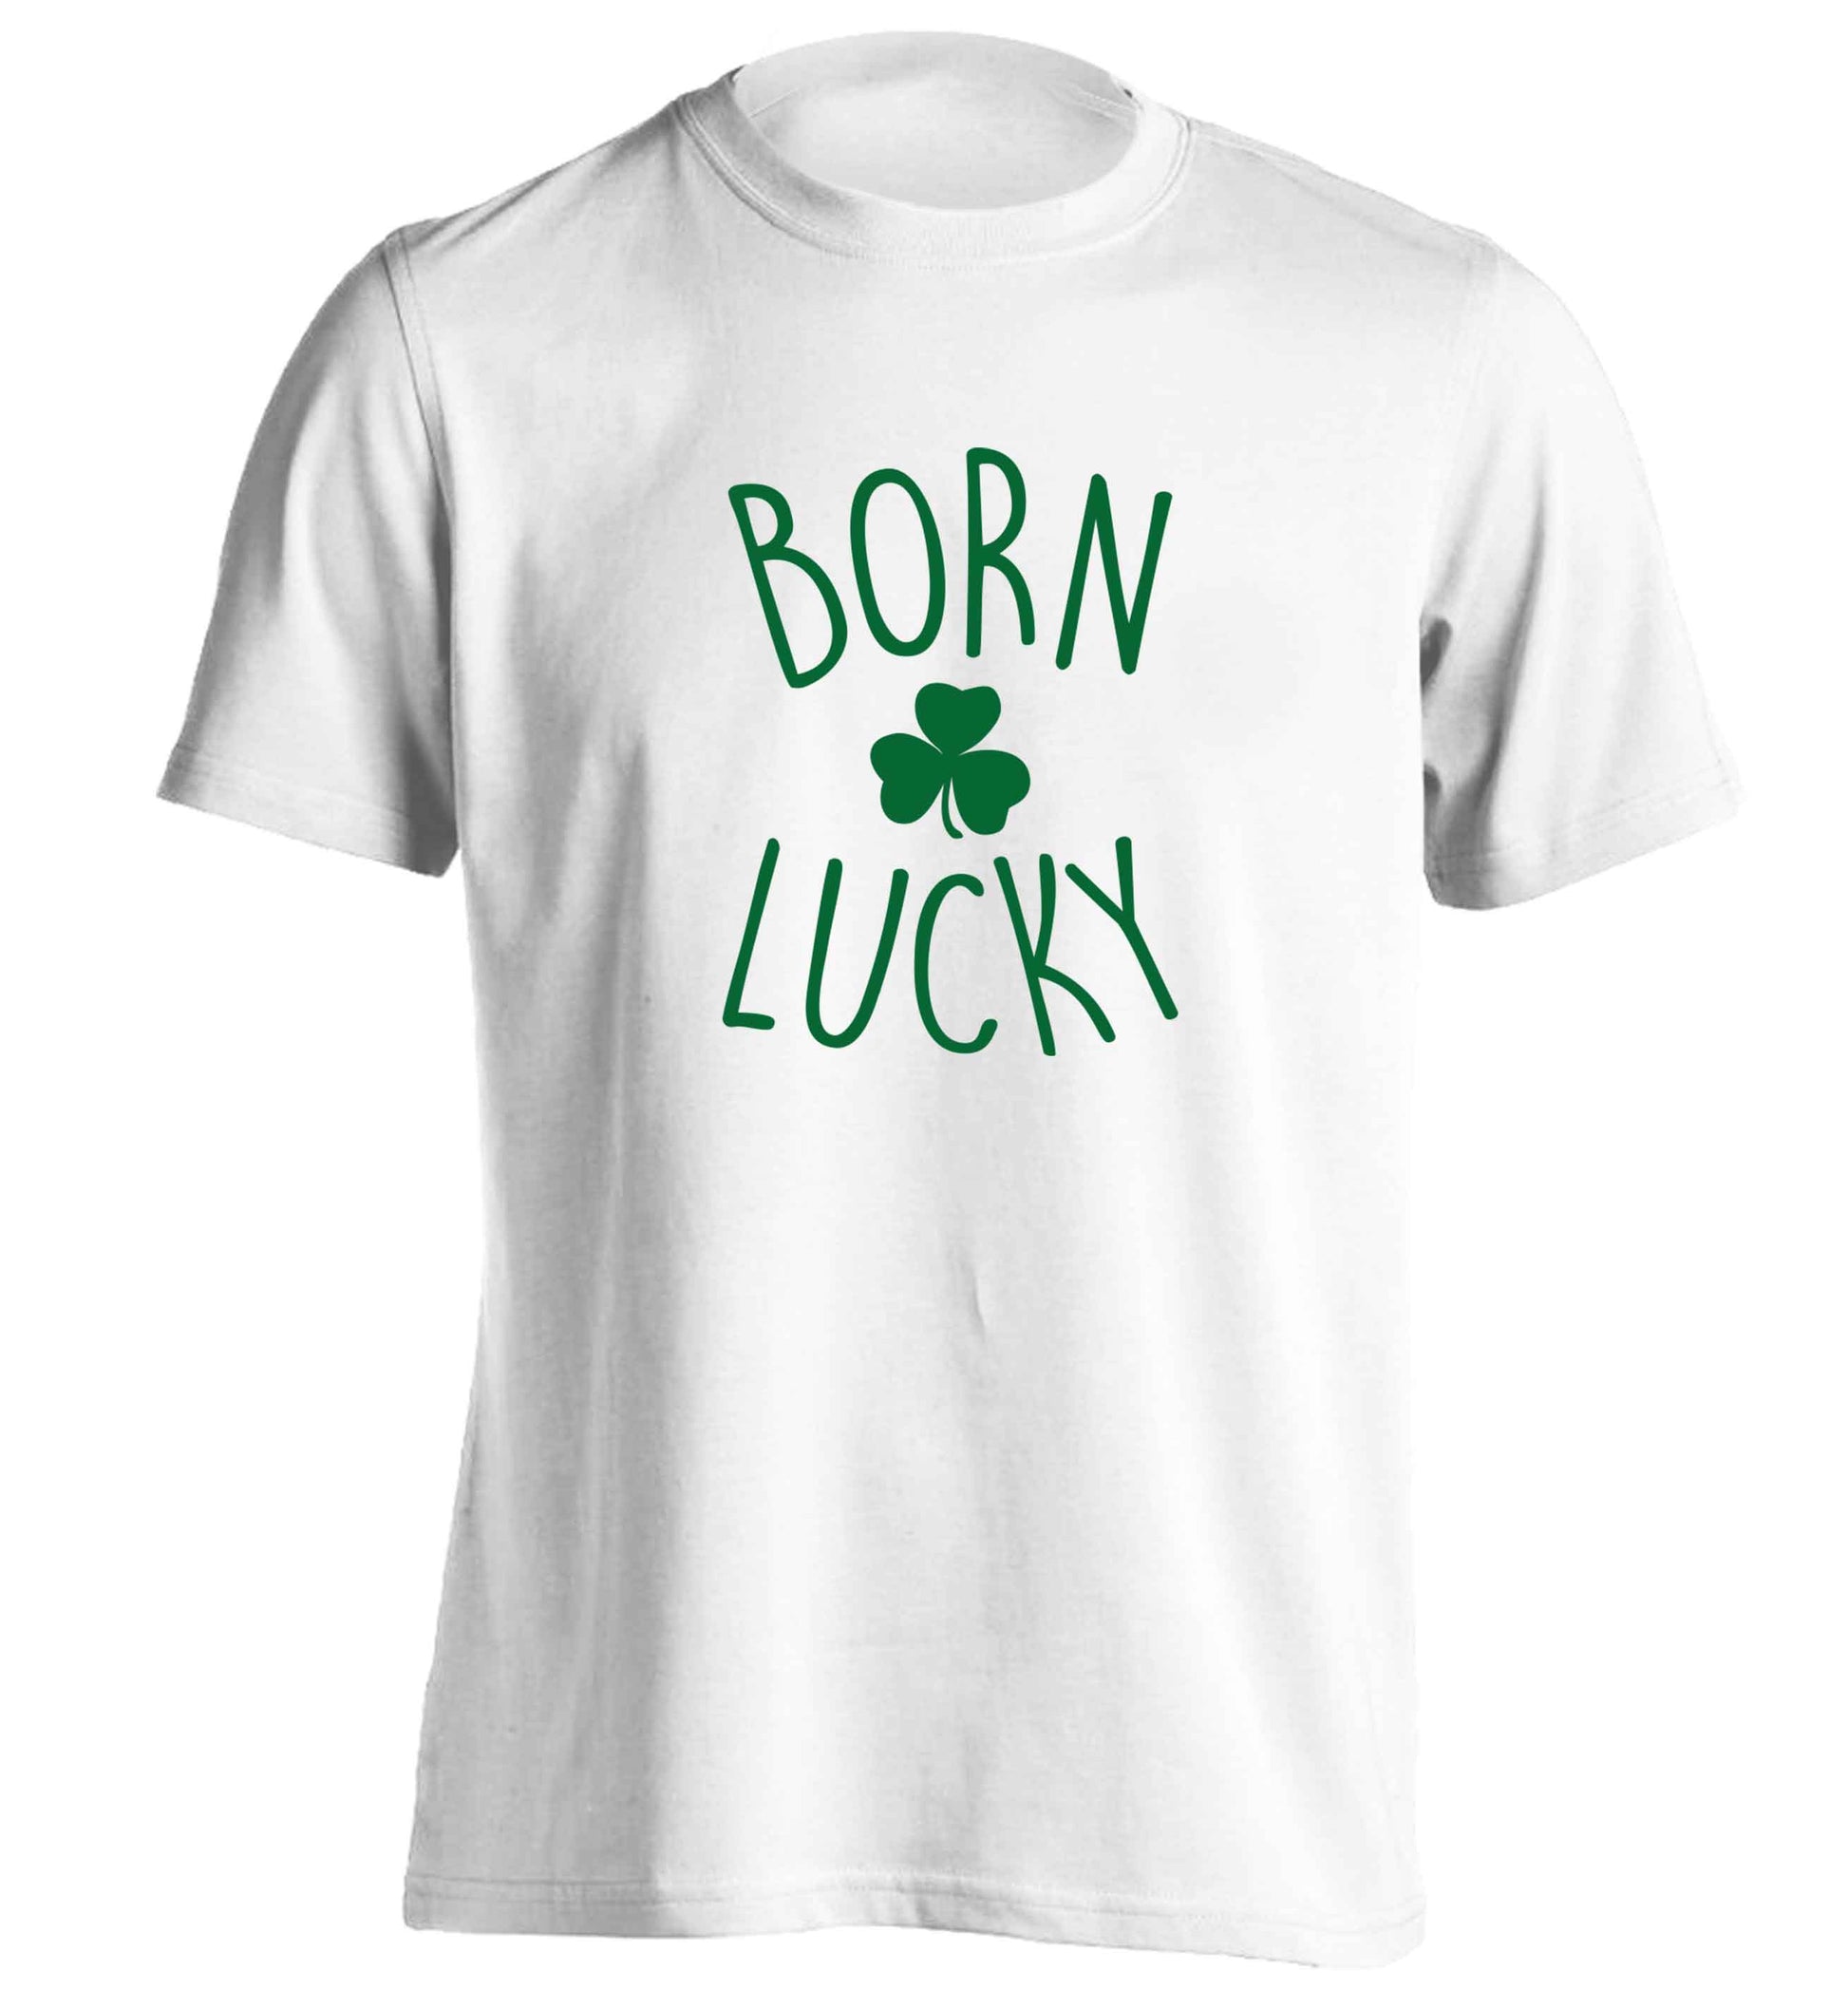 Born Lucky adults unisex white Tshirt 2XL